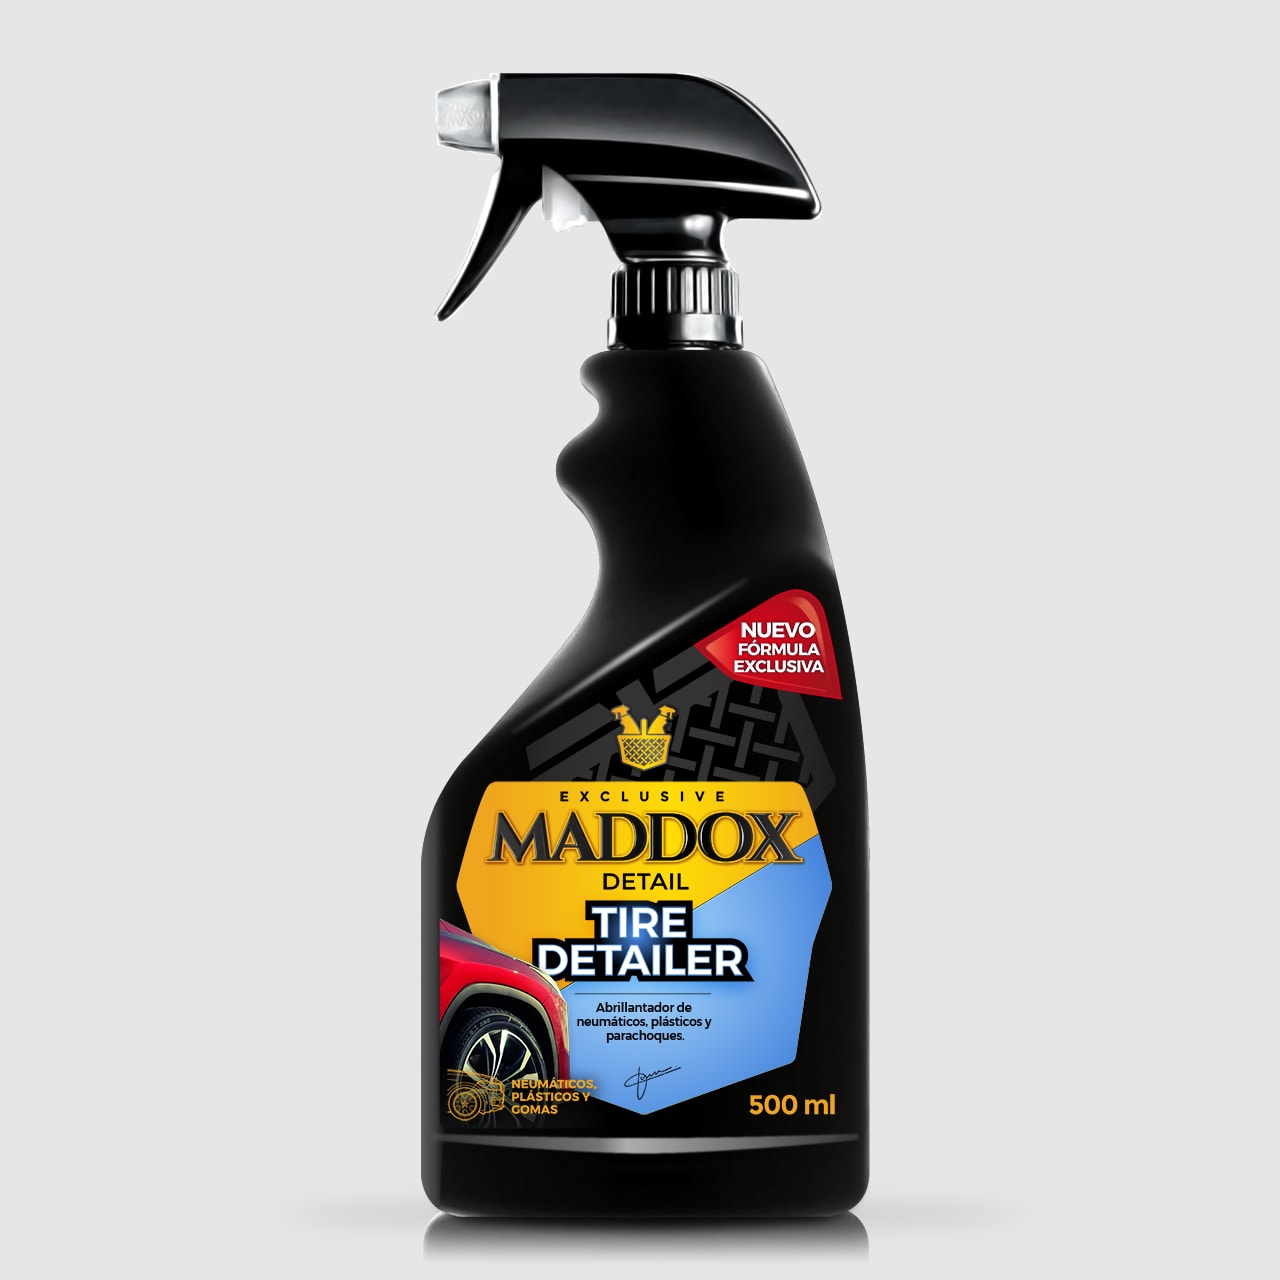 Maddox Detail - MADDOX DETAIL-TIRE DETAILER-Abrillantador de neumáticos, gomas y plásticos de exterior